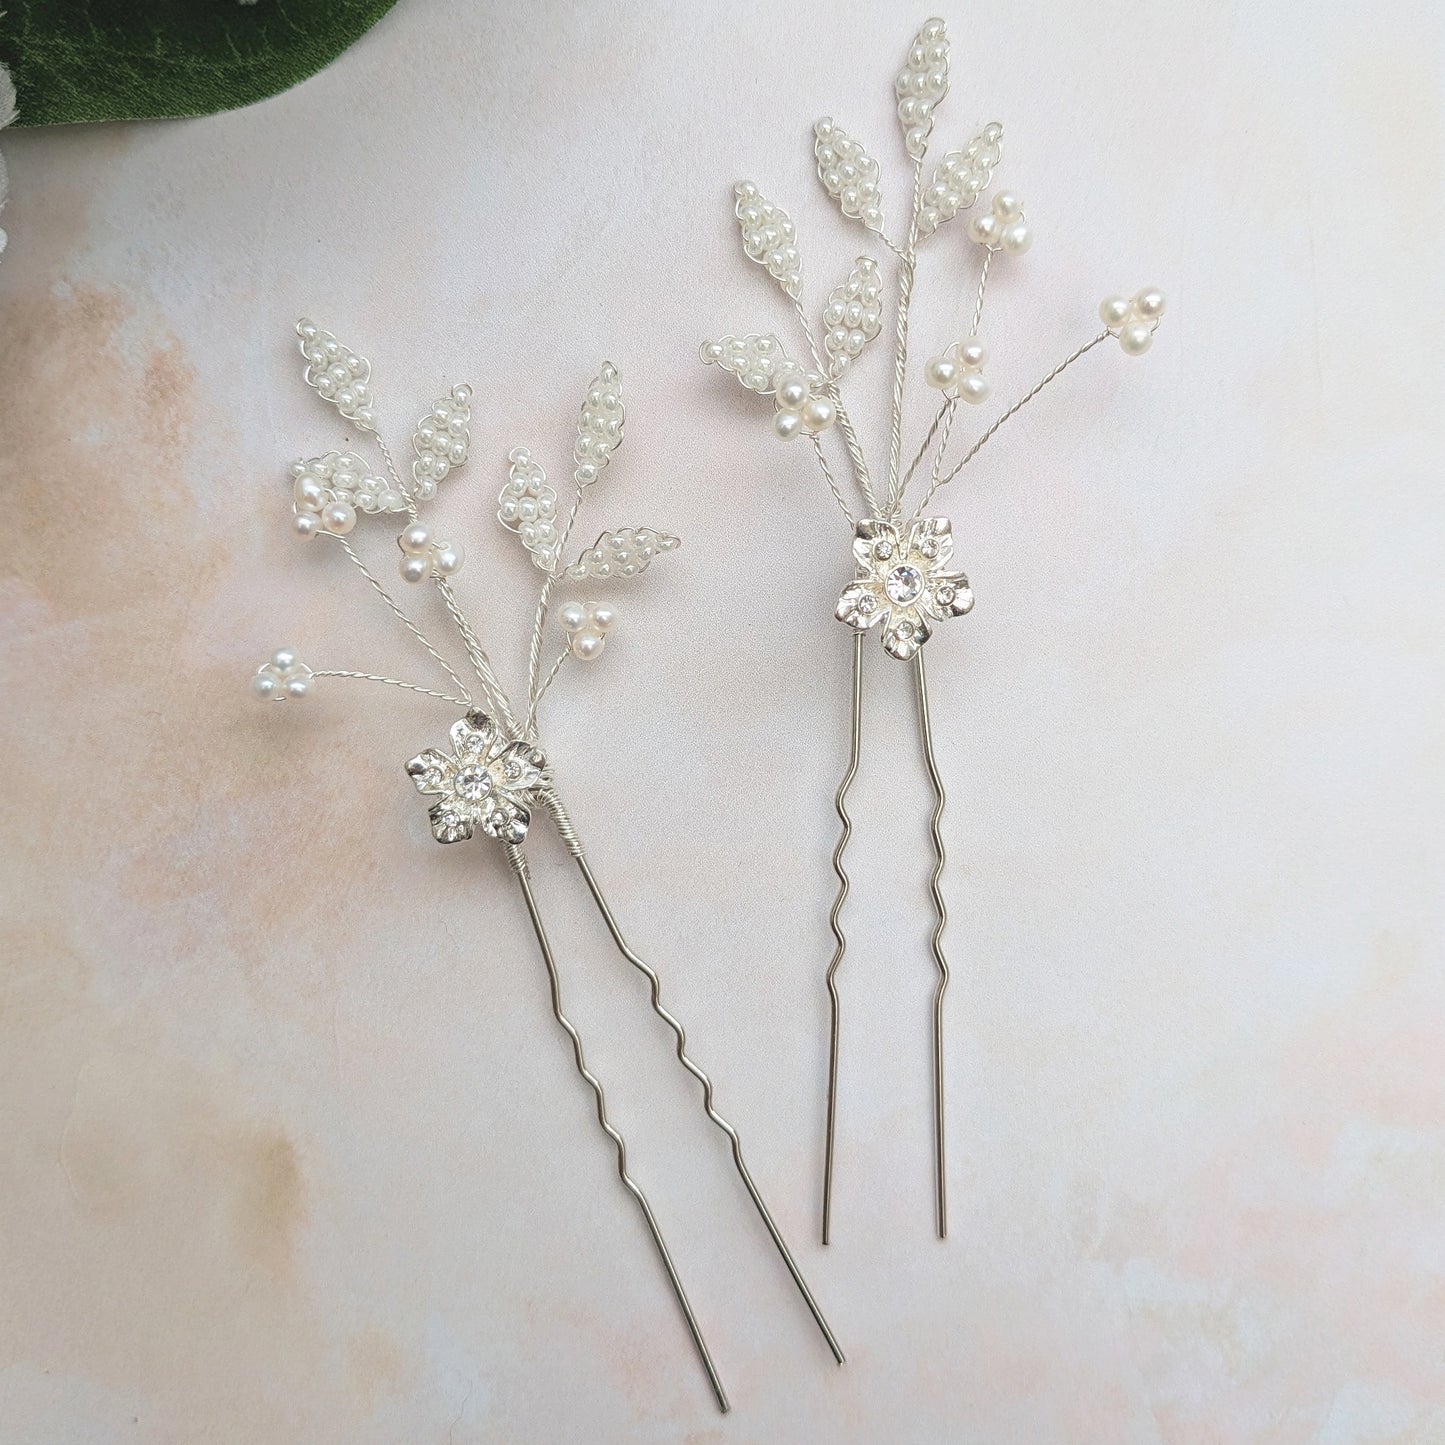 Floral hair pins for brides with crystal & pearl leaves - Susie Warner